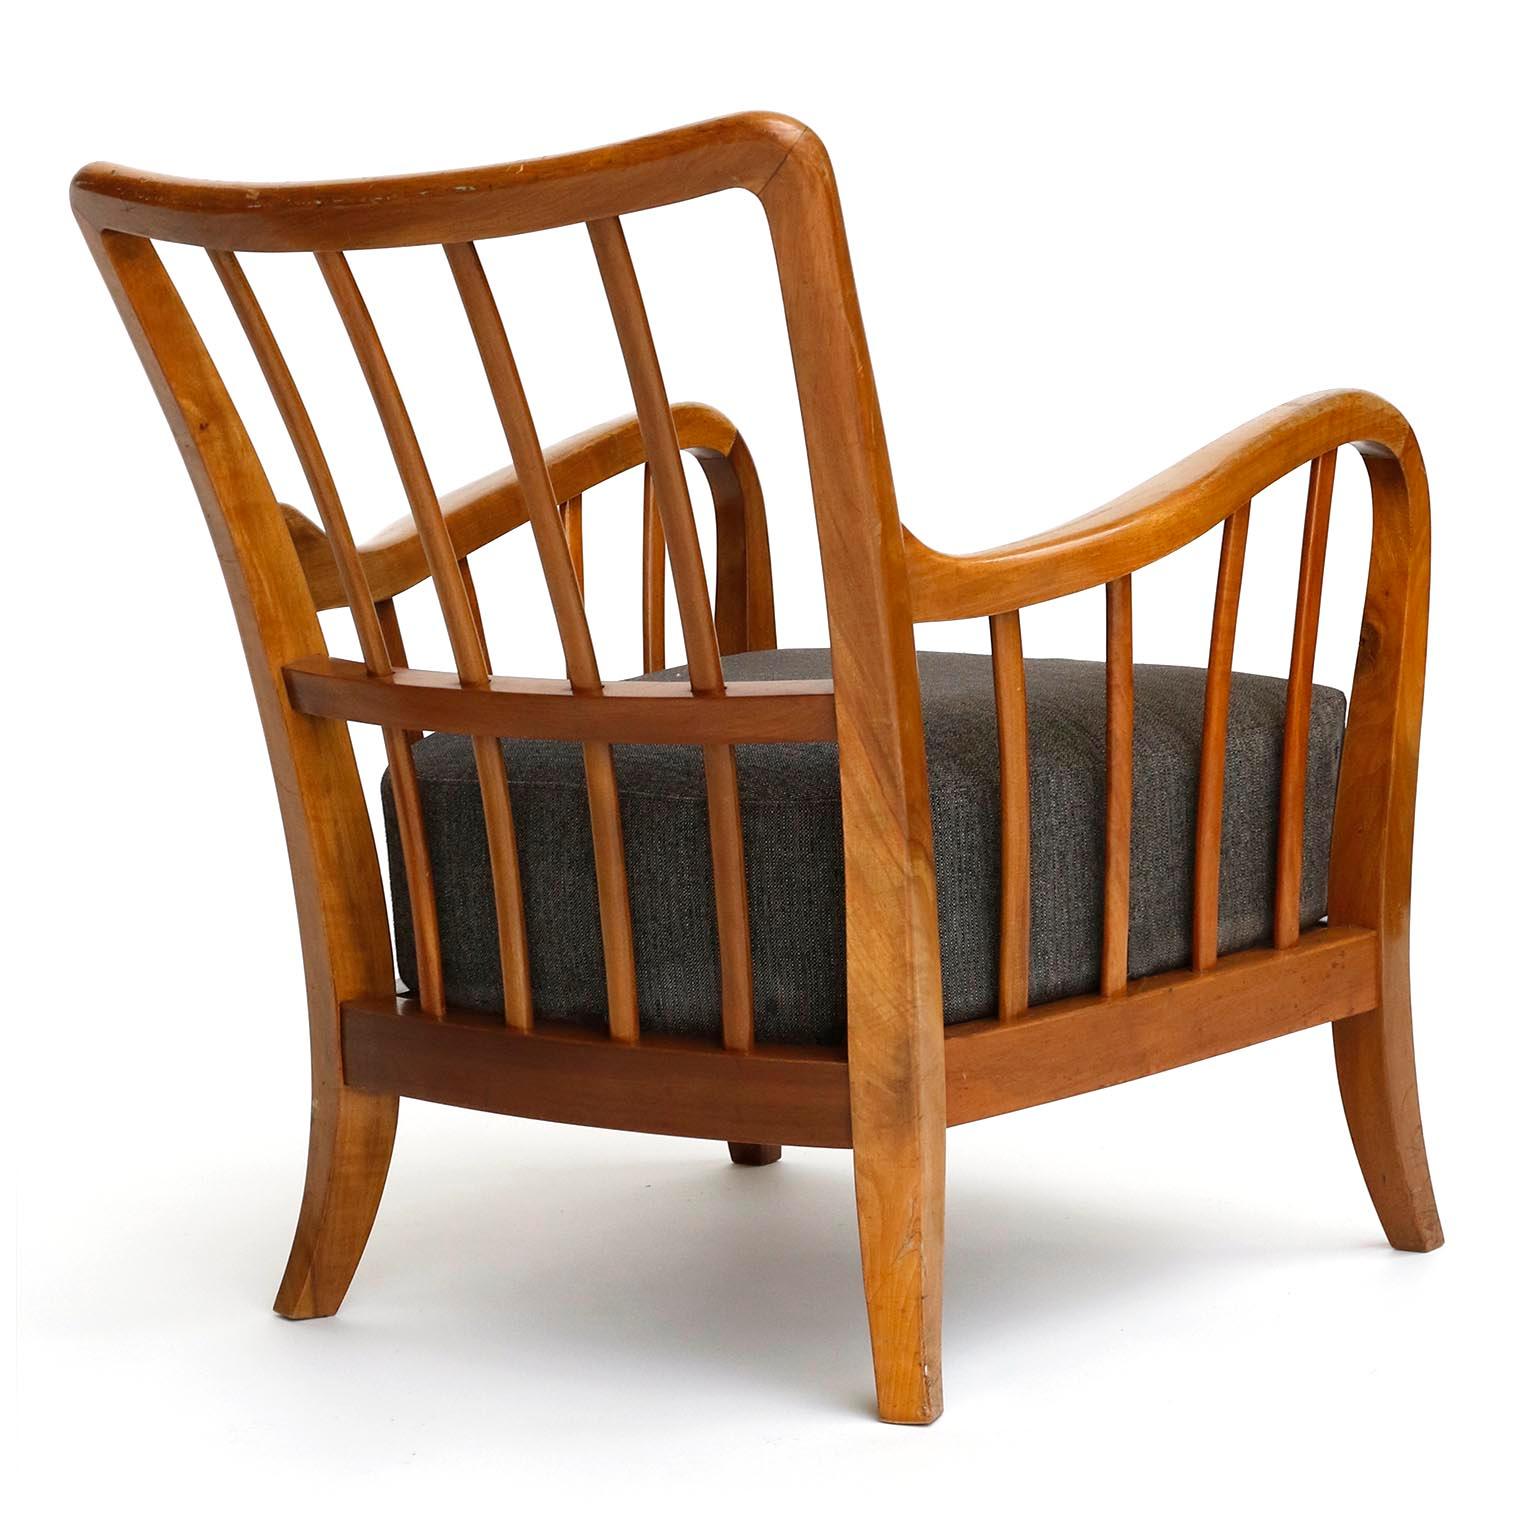 Mid-20th Century Armchair Lounge Chair Walnut Wood, Josef Frank Attributed, Thonet